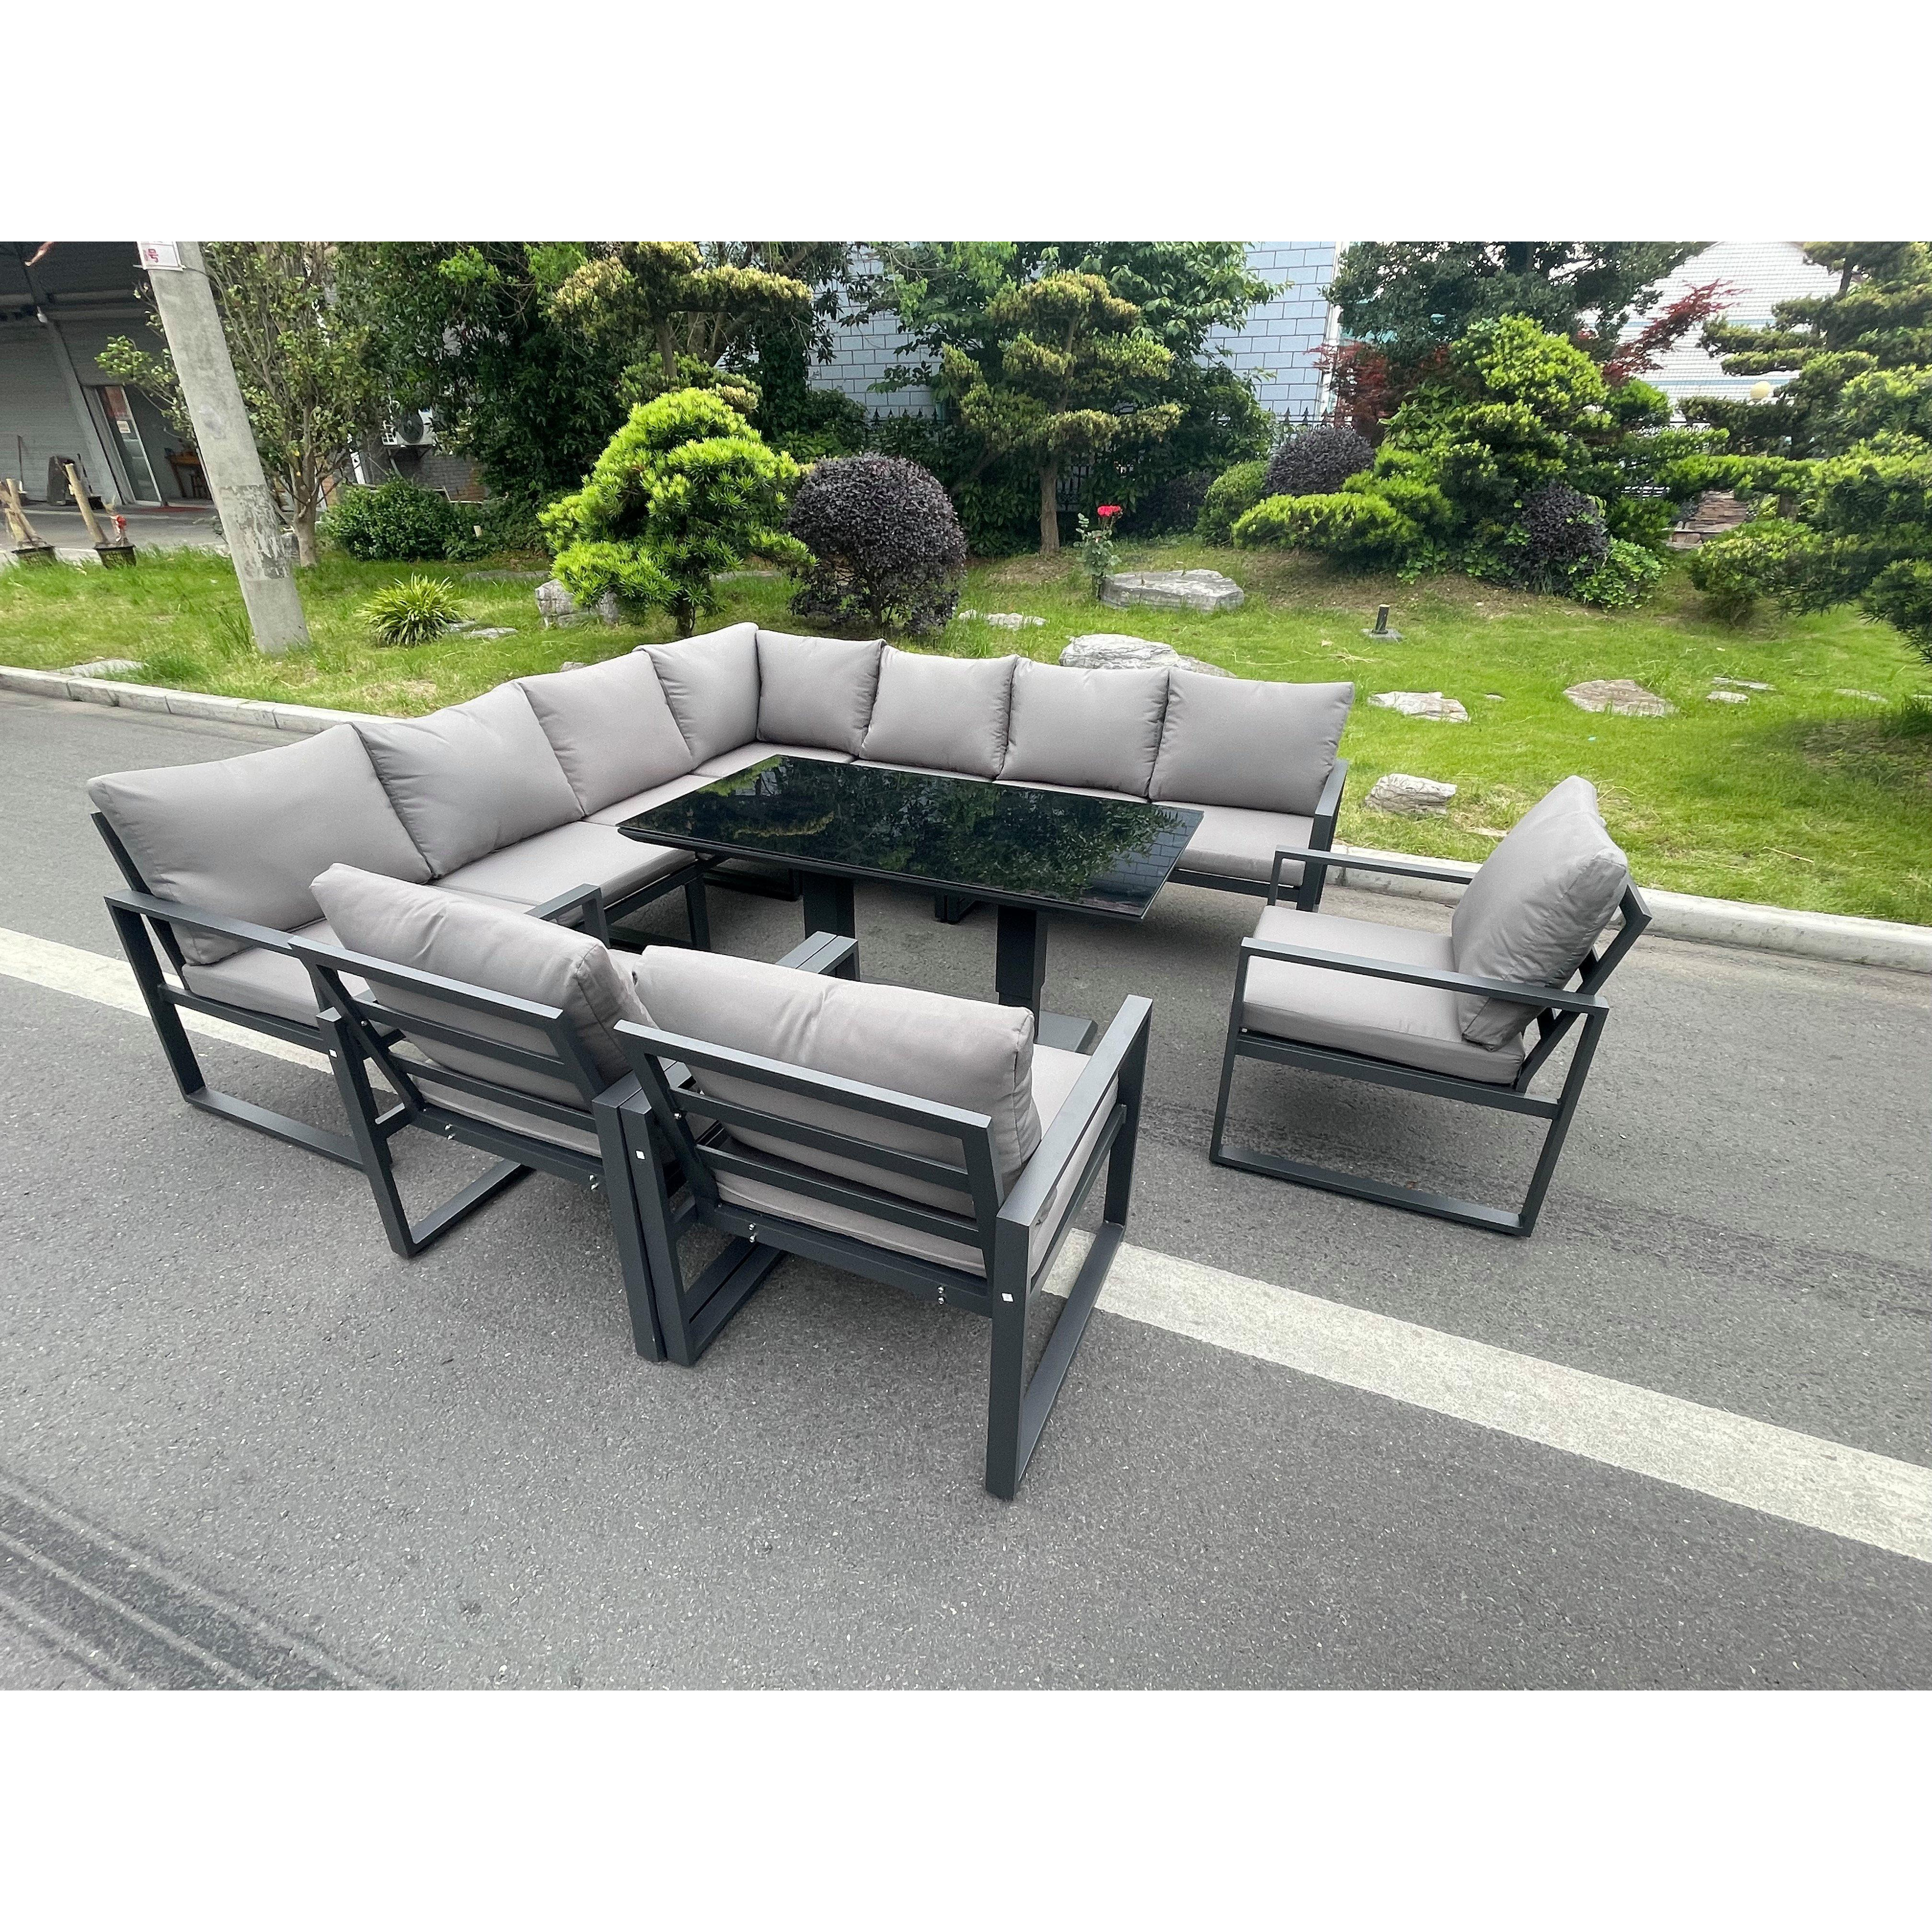 Aluminum Outdoor Garden Furniture Corner Sofa 3 Arm Chair Adjustable Rising Lifting Dining Table Set Dark Grey 10 Seater - image 1